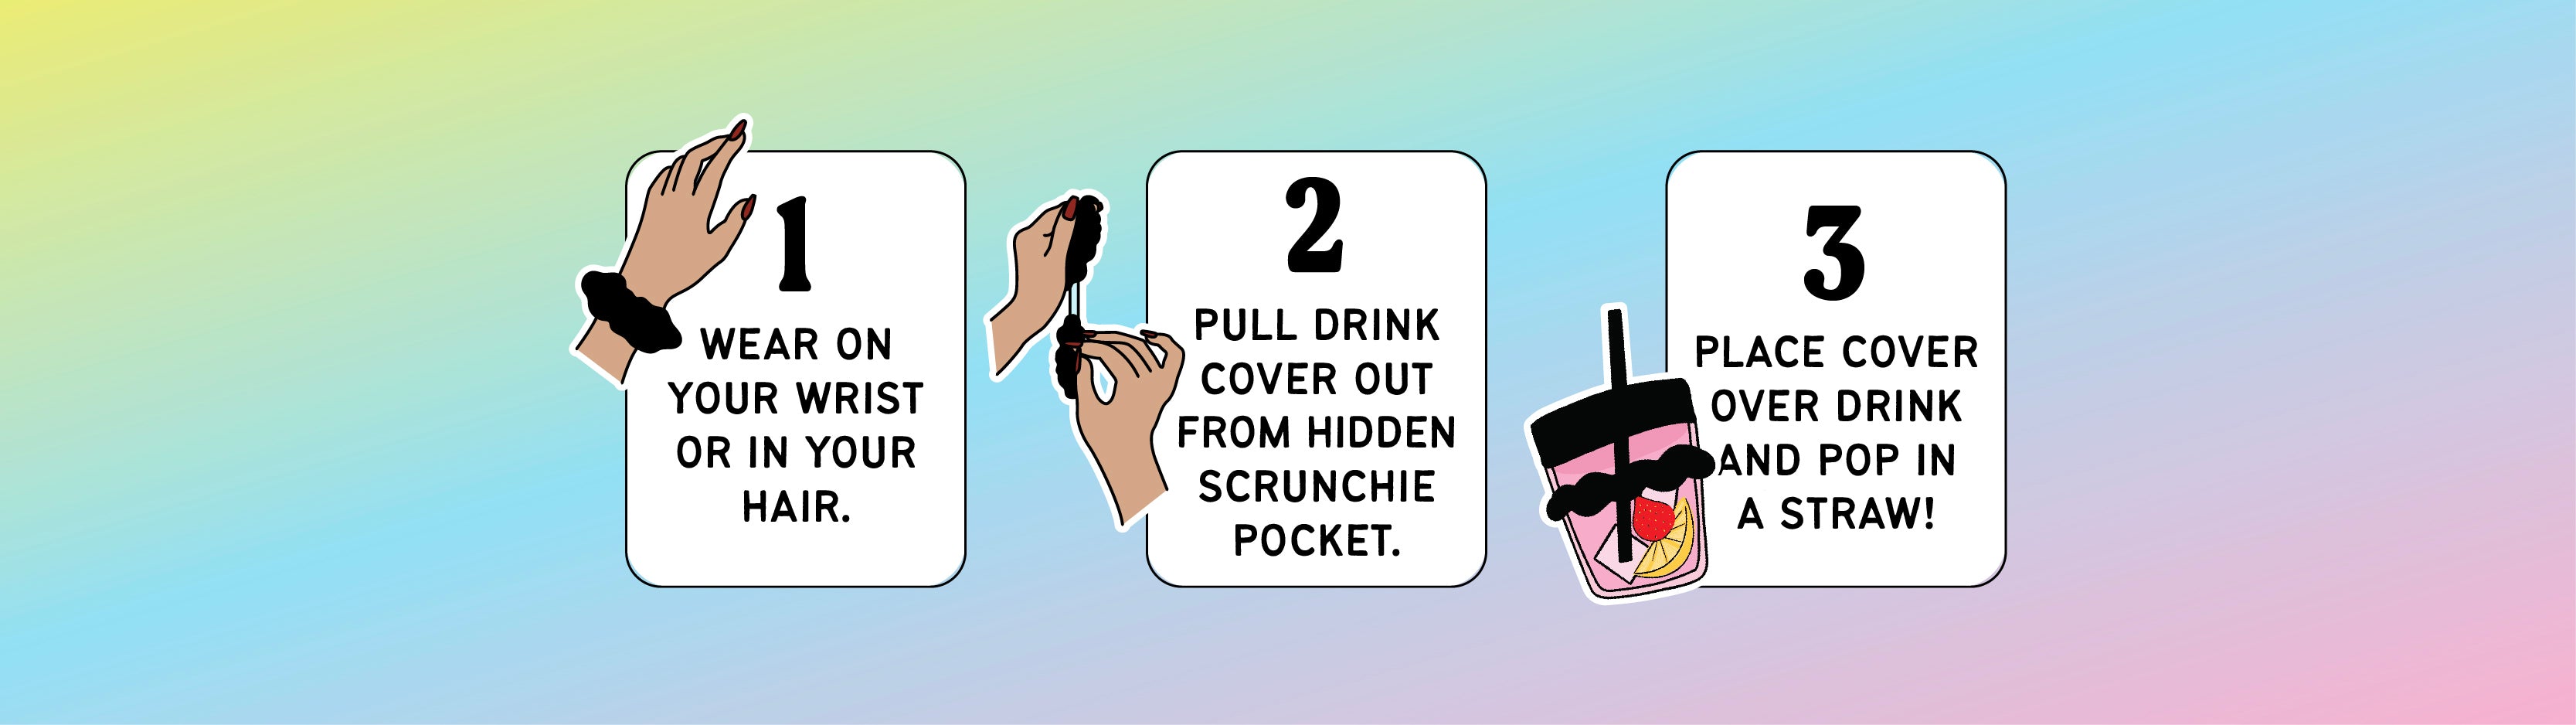 LoveKess Clothing - NightCap Drink Cover Scrunchie- The